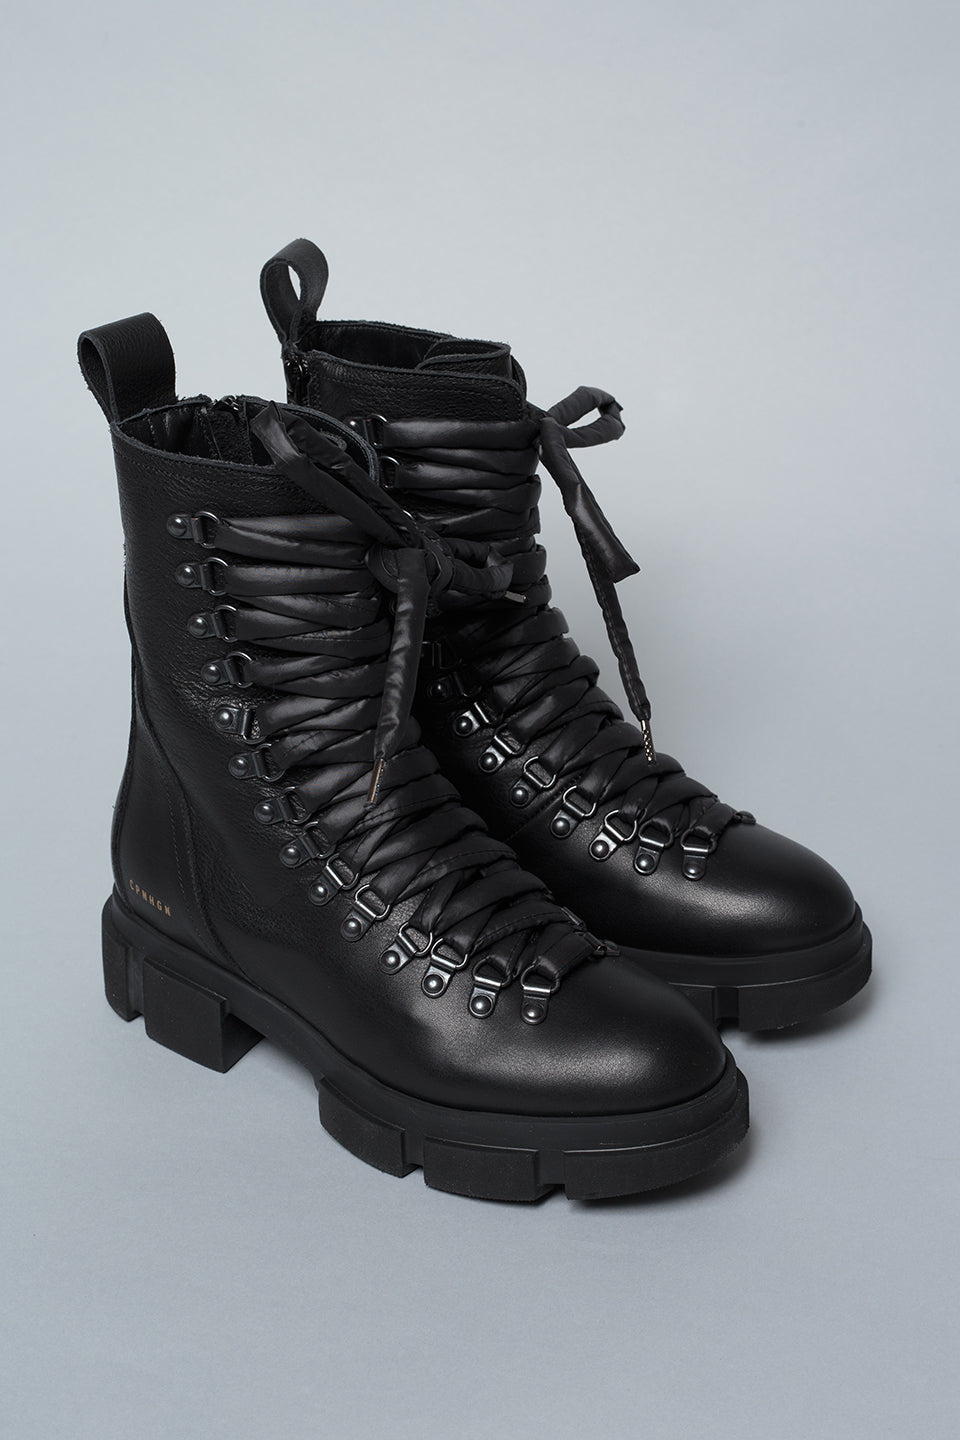 CPH559 Vitello Black Hiker Boot